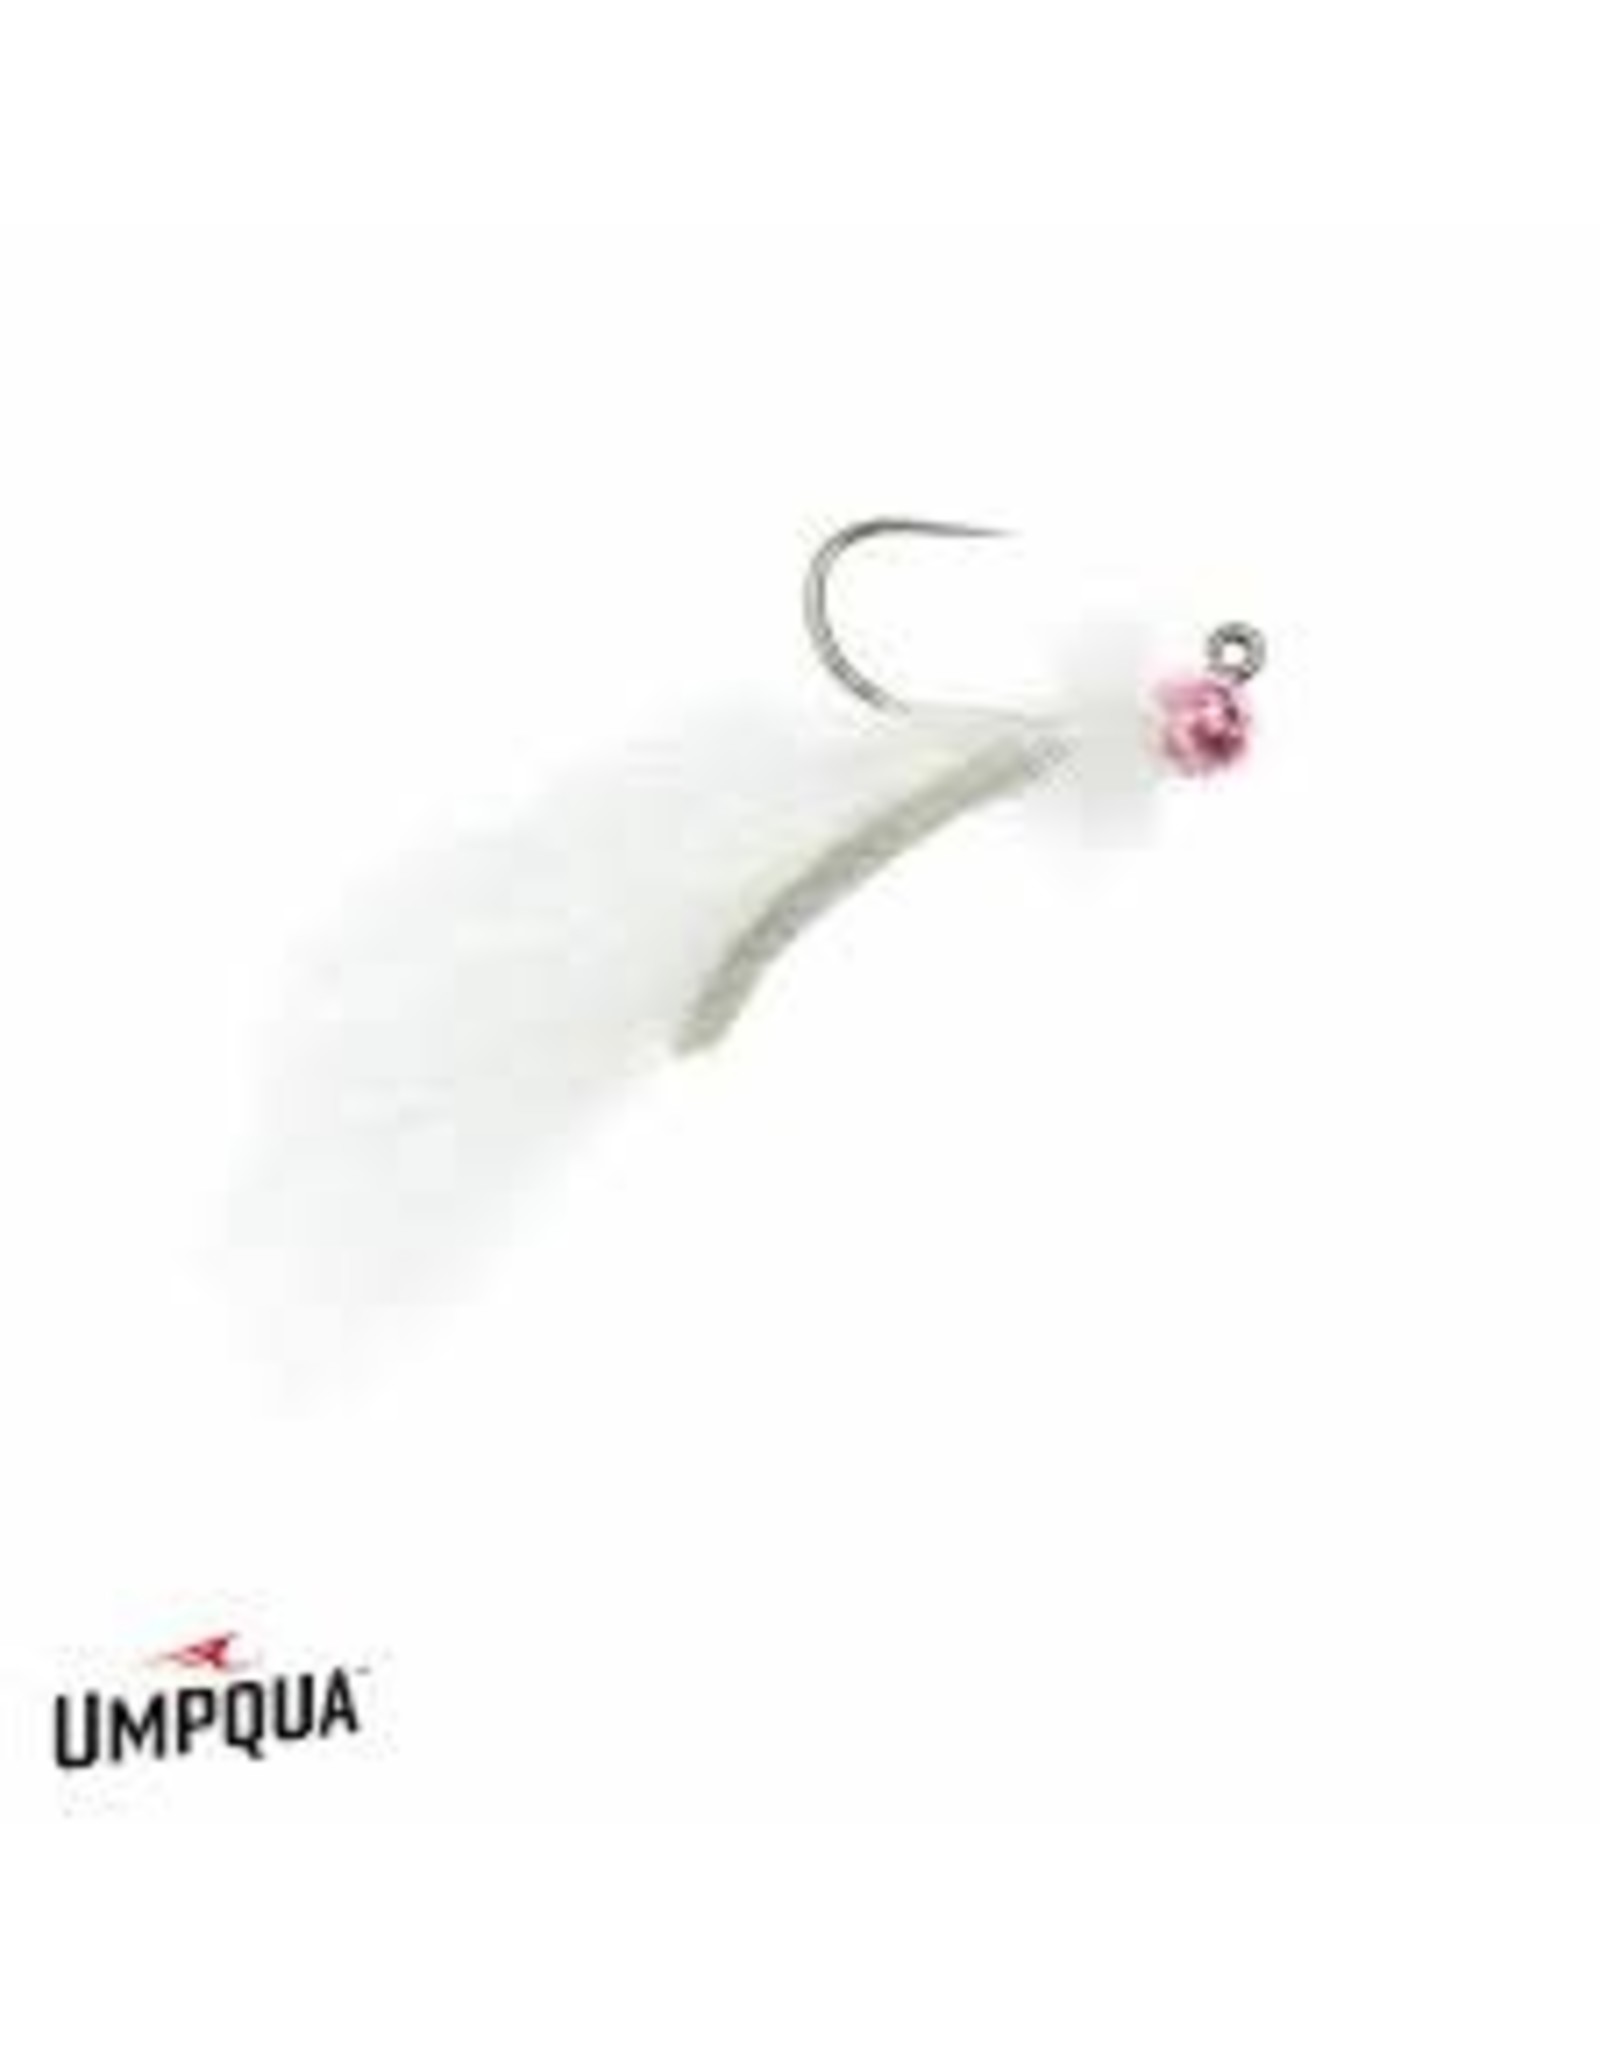 Umpqua Mayers Mini Leech